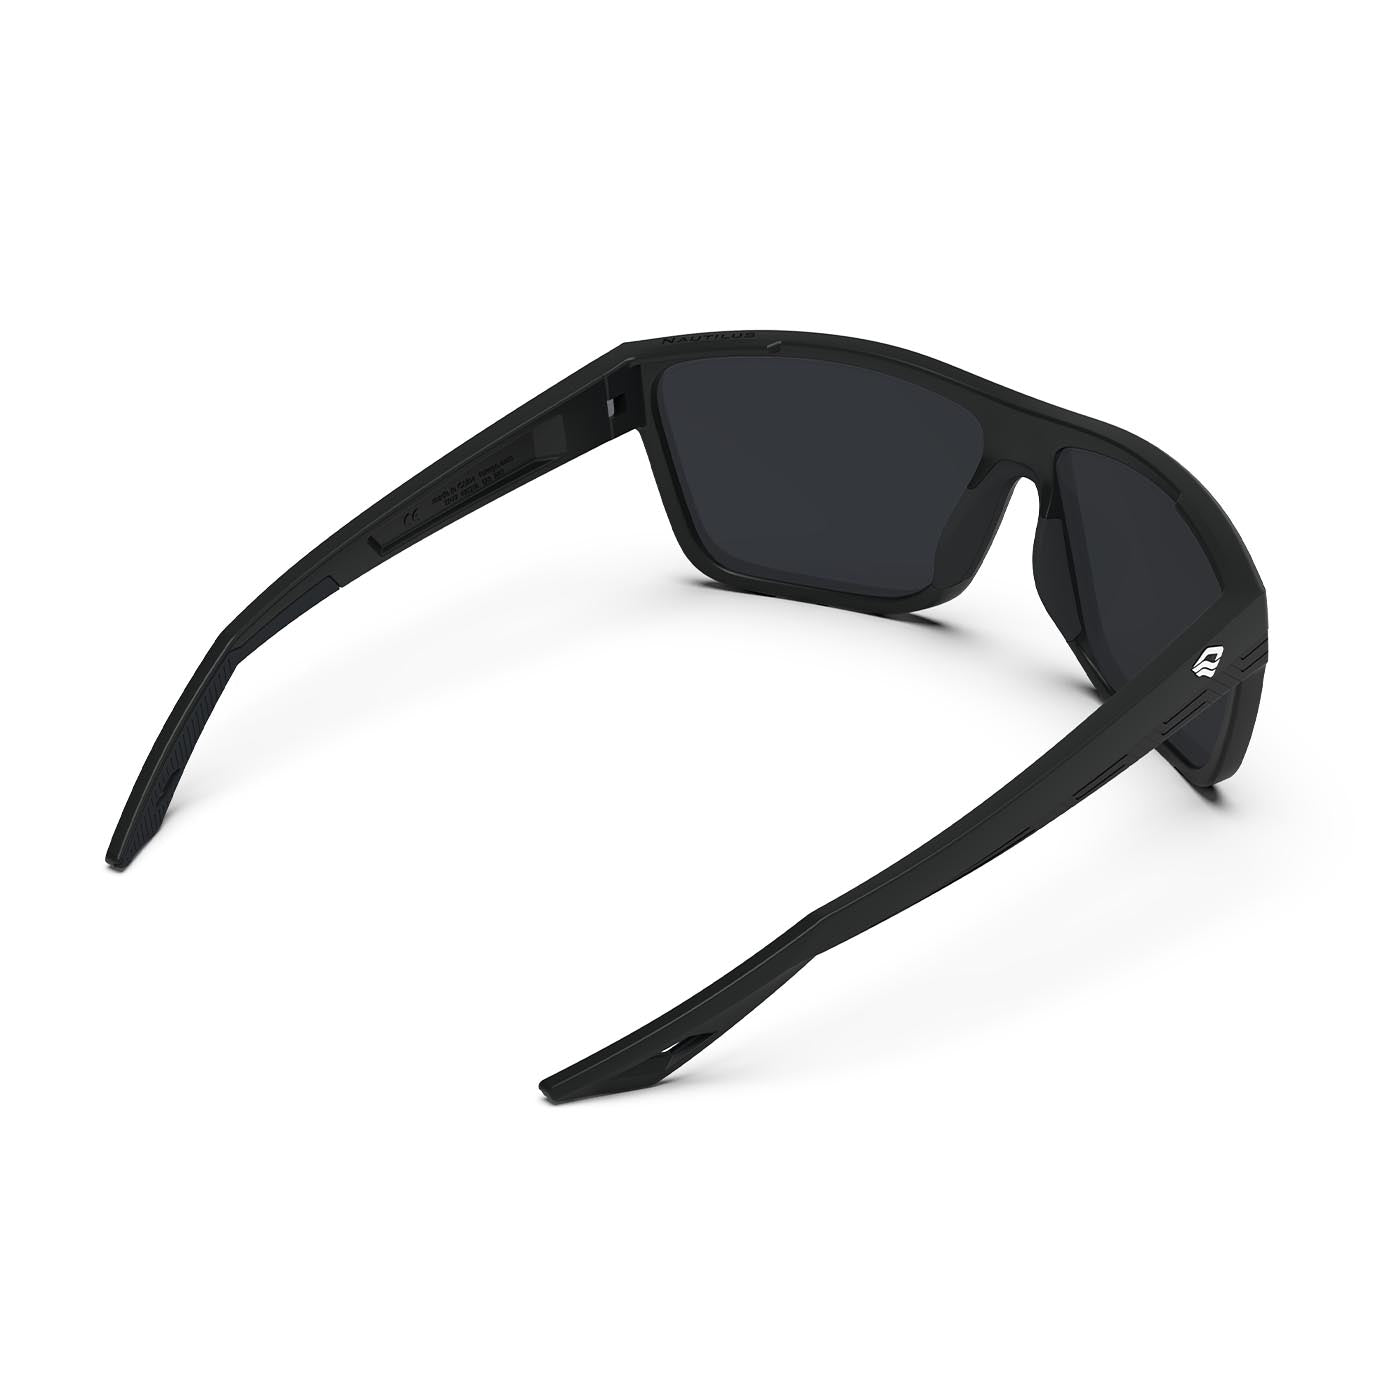 Torege 'ICEBREAKER' Sports Polarized Sunglasses for Men and Women - Lifetime Warranty - Men & Women Glasses for Golf, Fishing, and More